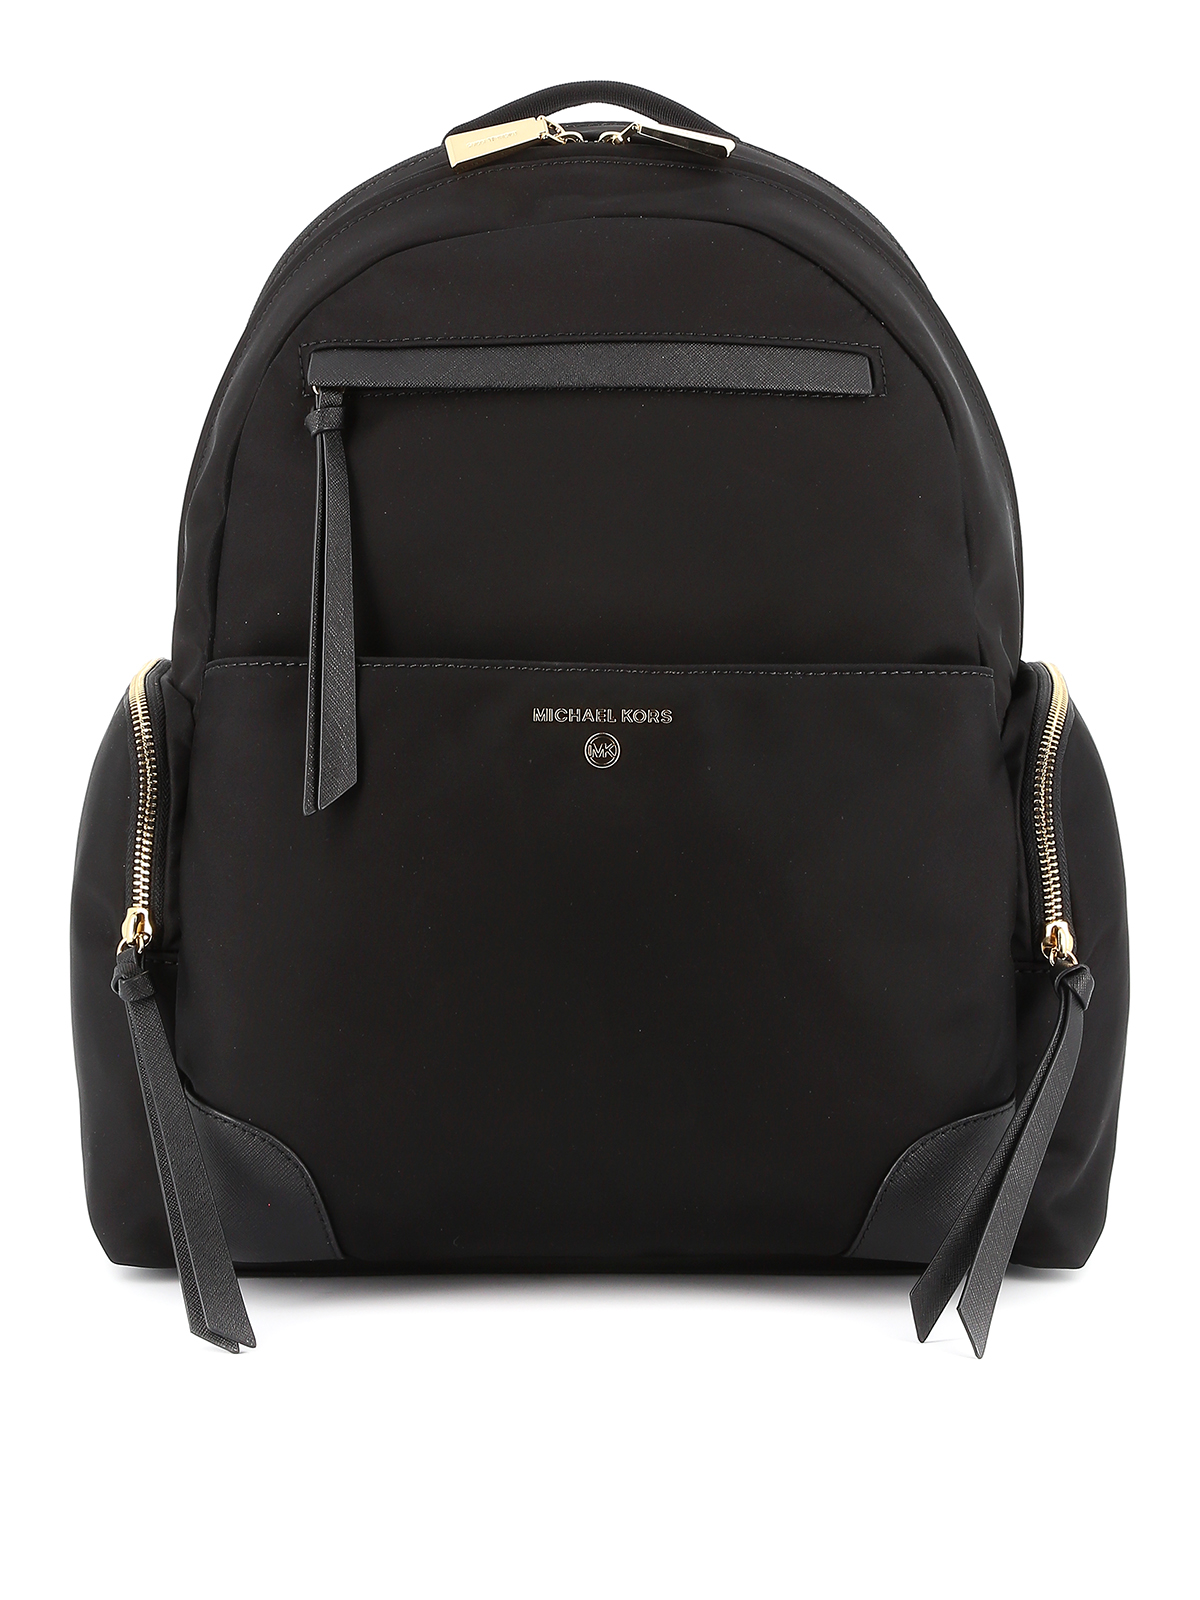 Backpacks Michael Kors - Prescott backpack - 30S0G1RB7C001 | iKRIX.com